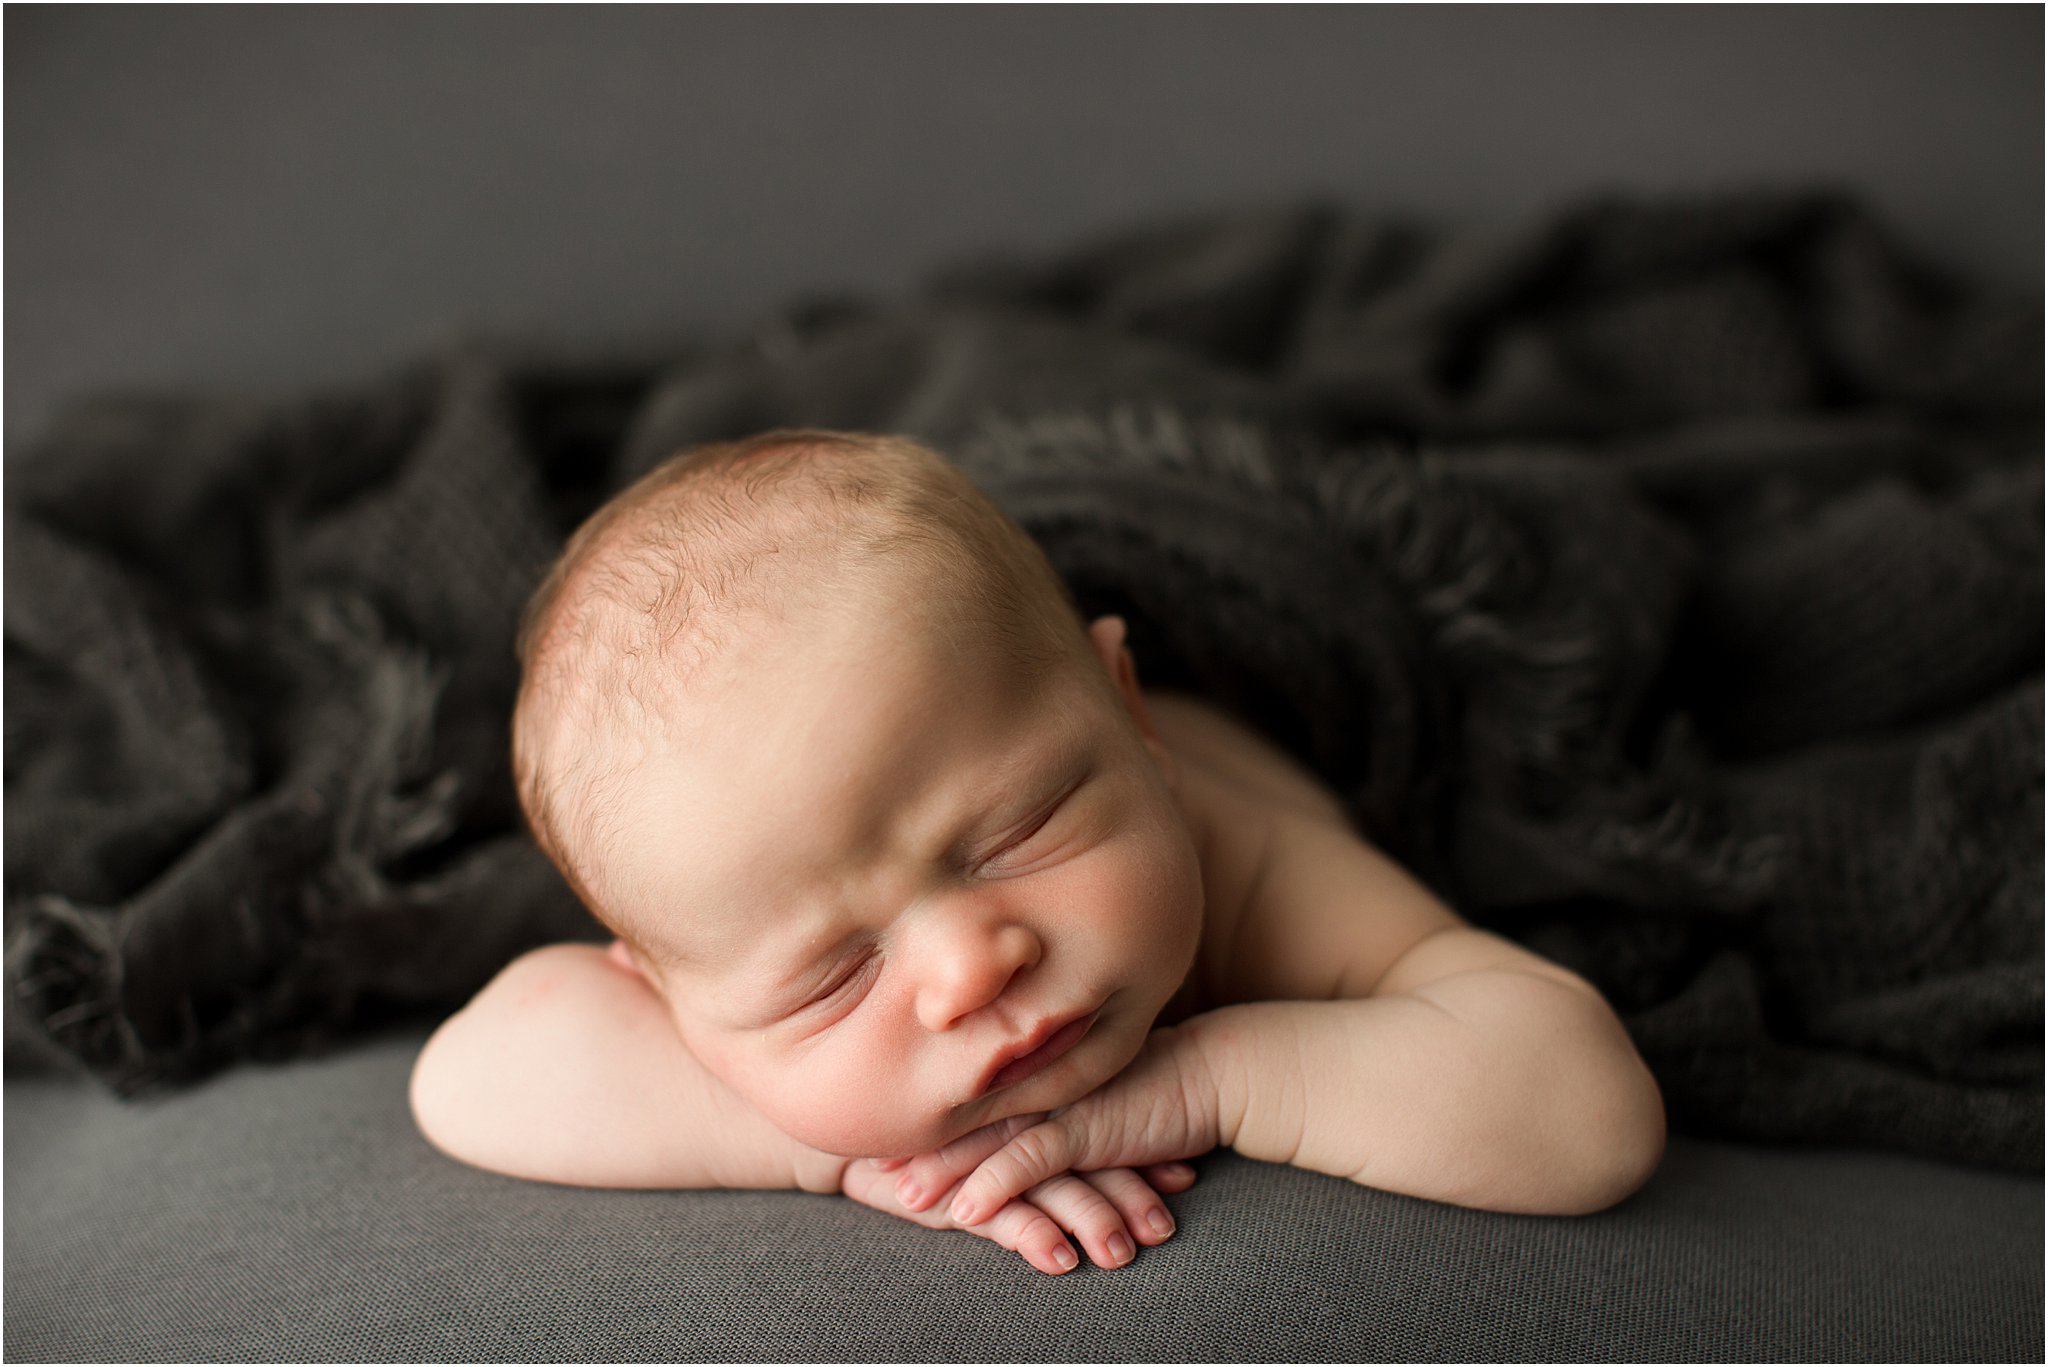 newborn boy laying on gray fabric